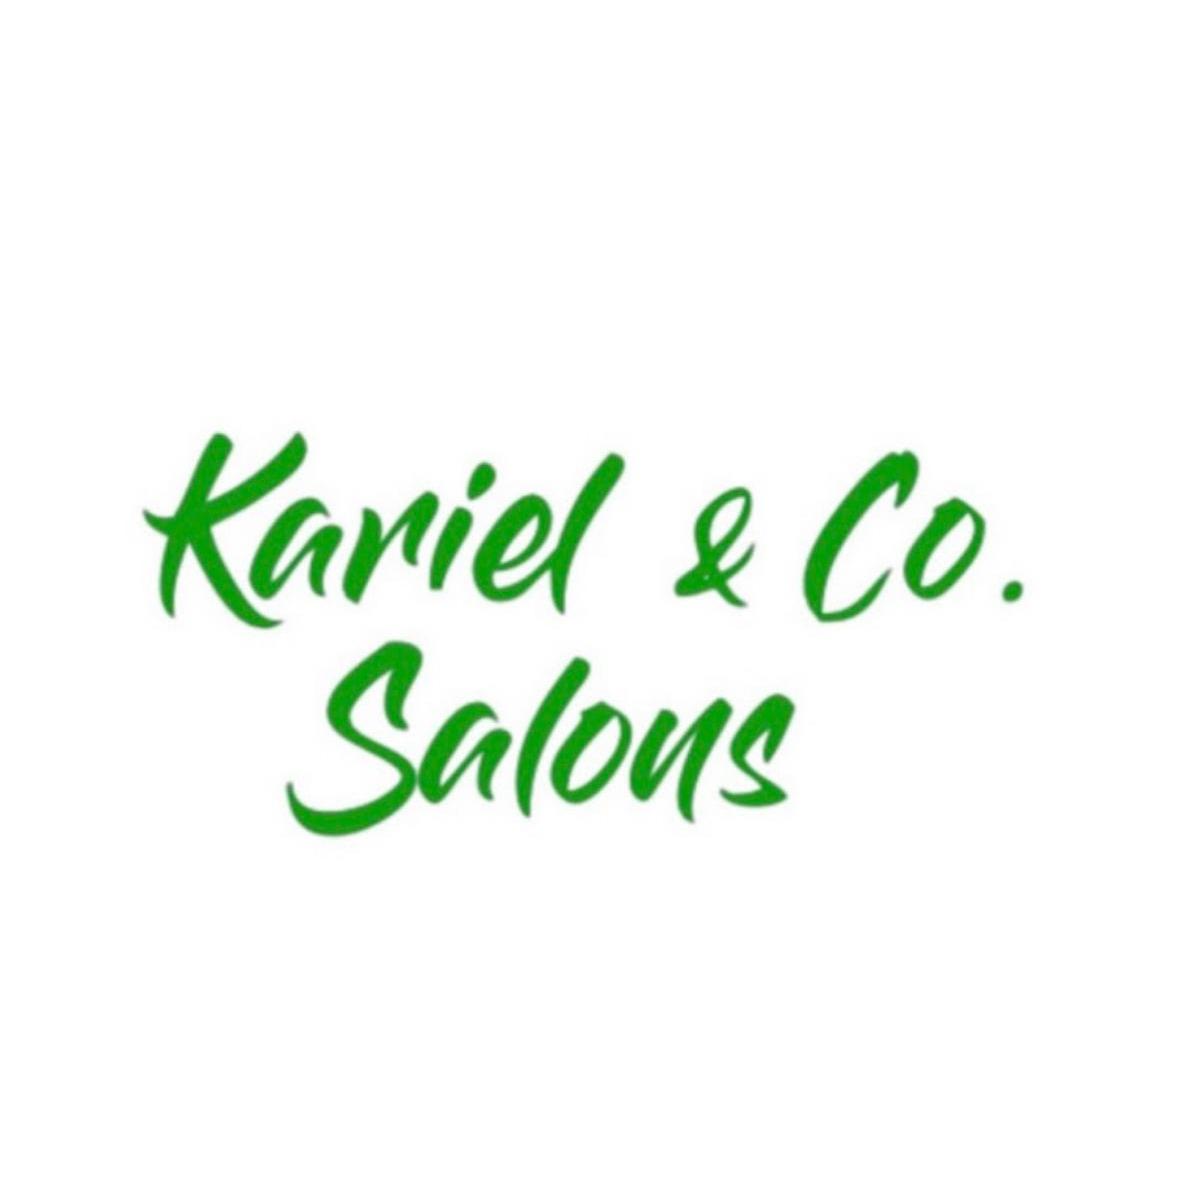 Kariel & Co Salons LLC - Sandy Springs, GA 30328 - (404)285-8767 | ShowMeLocal.com